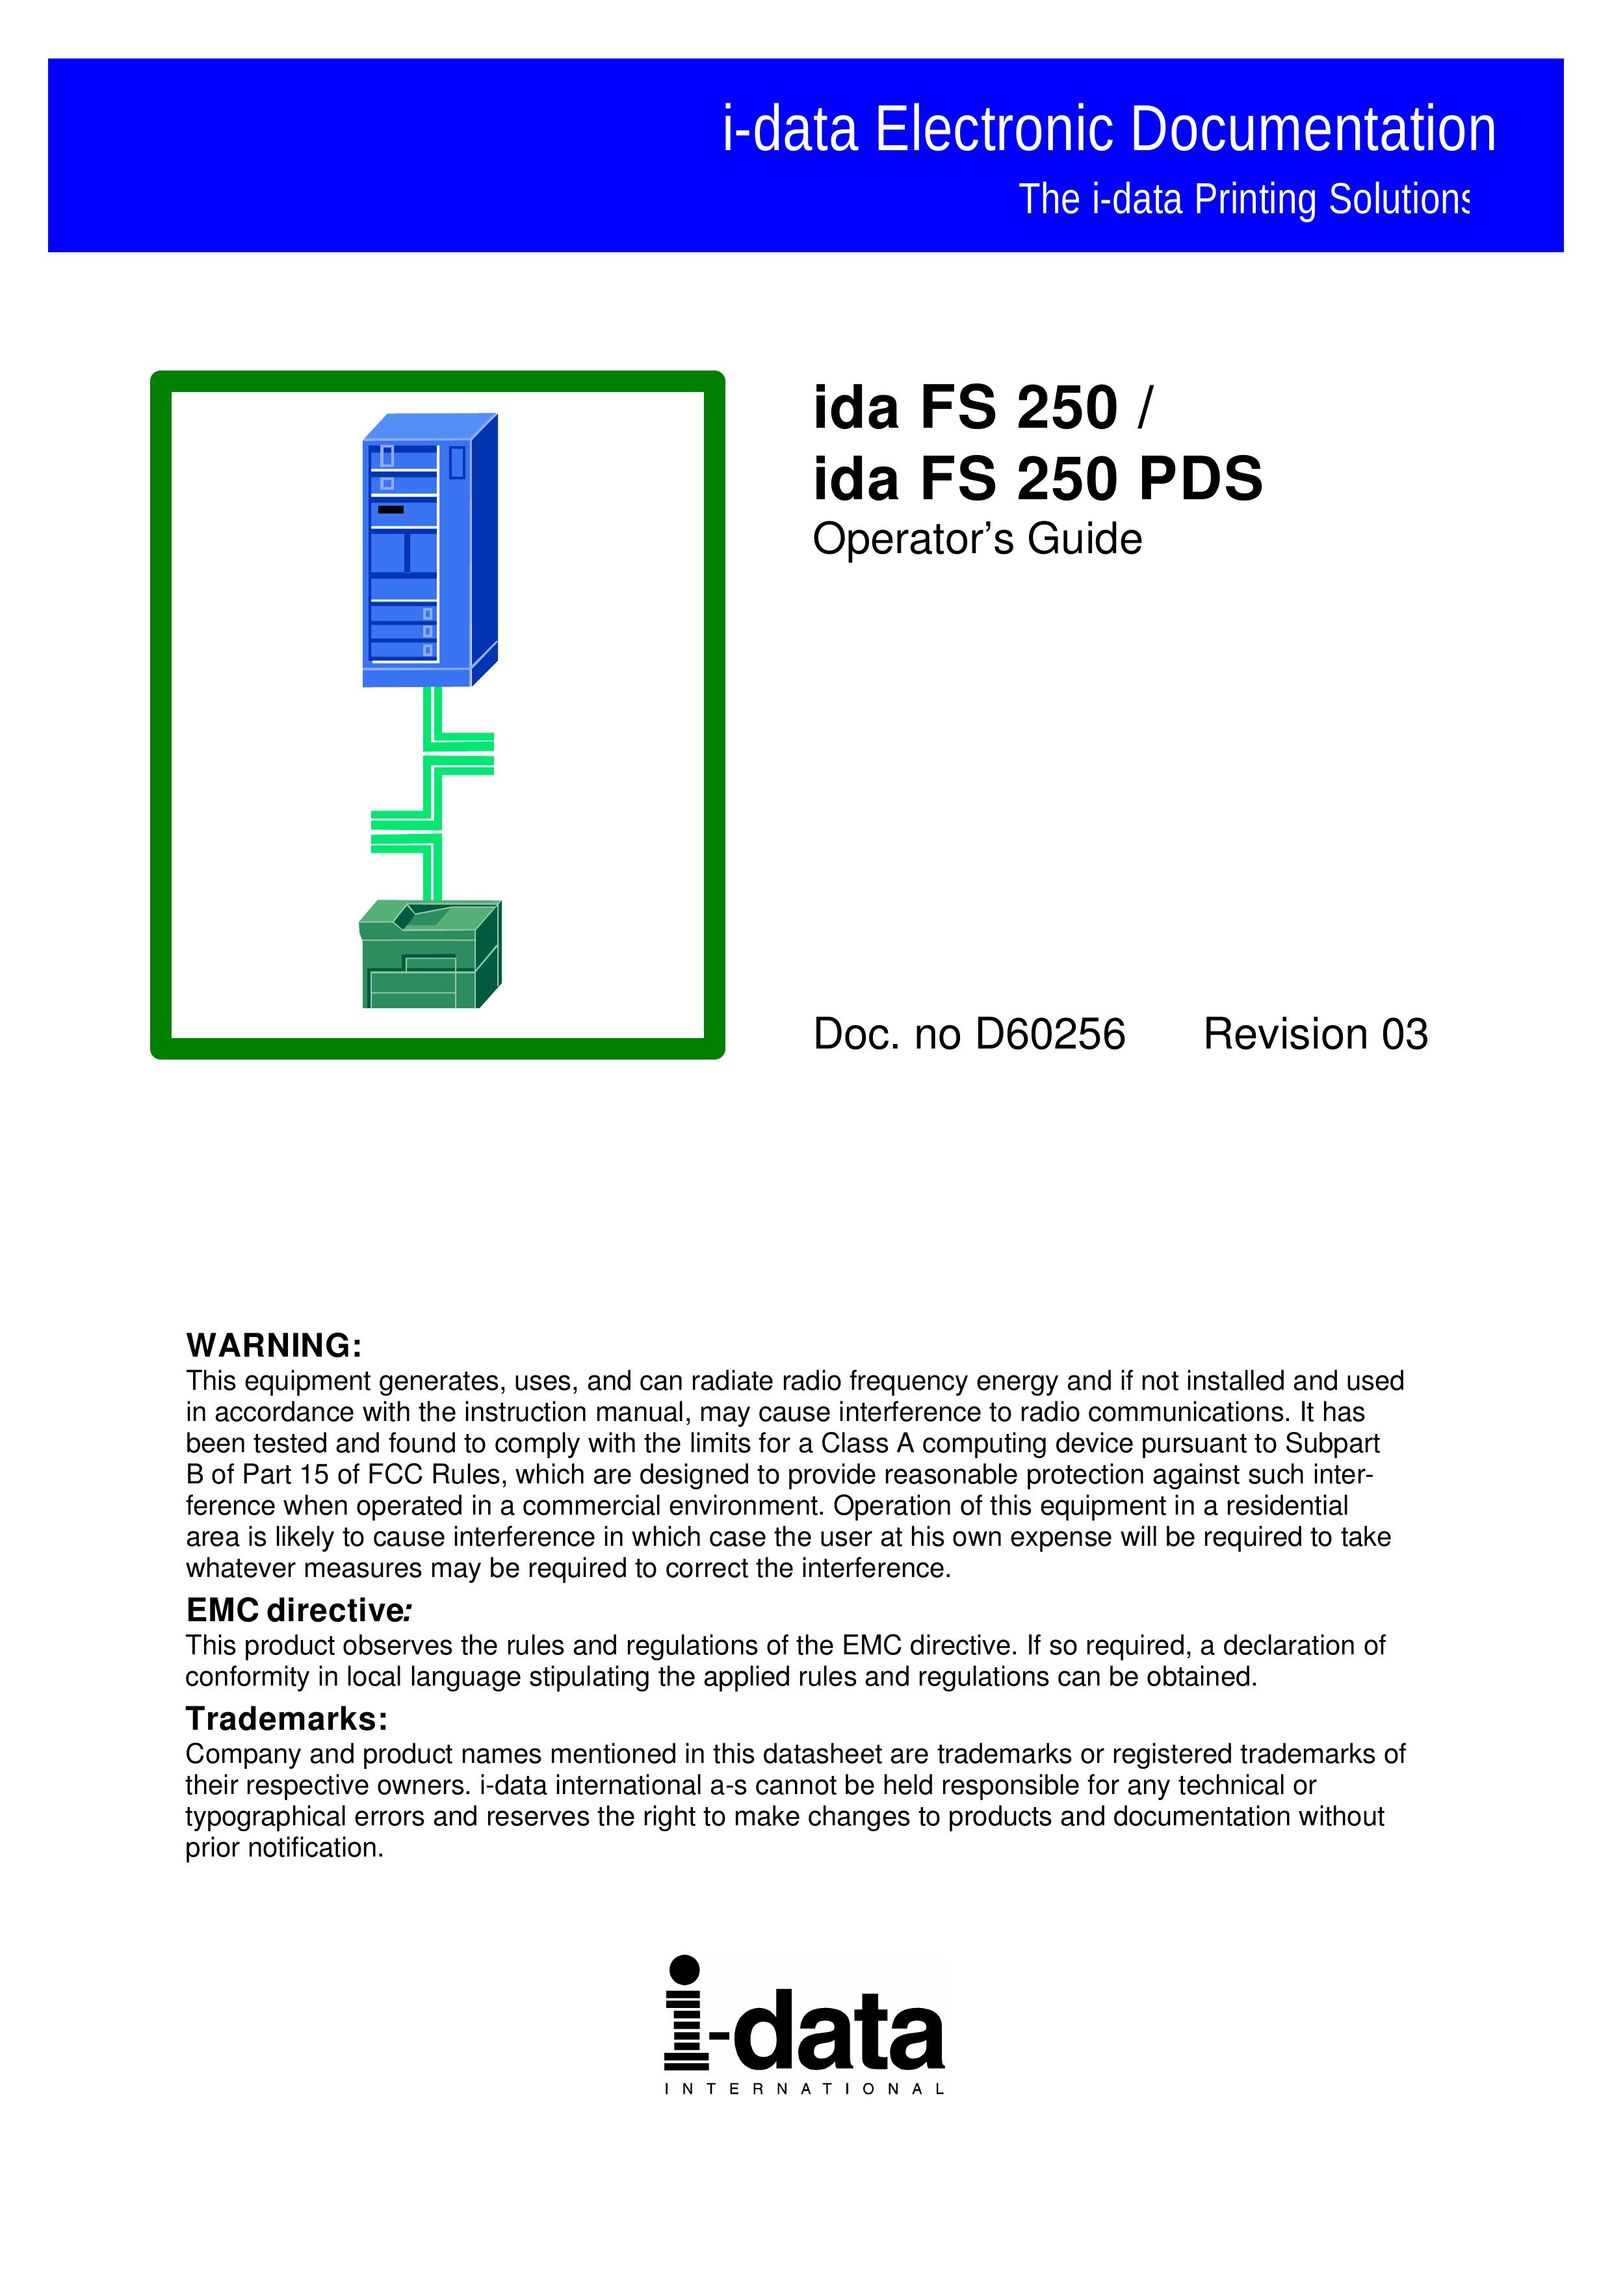 I-Data FS 250 PDS Portable Media Storage User Manual